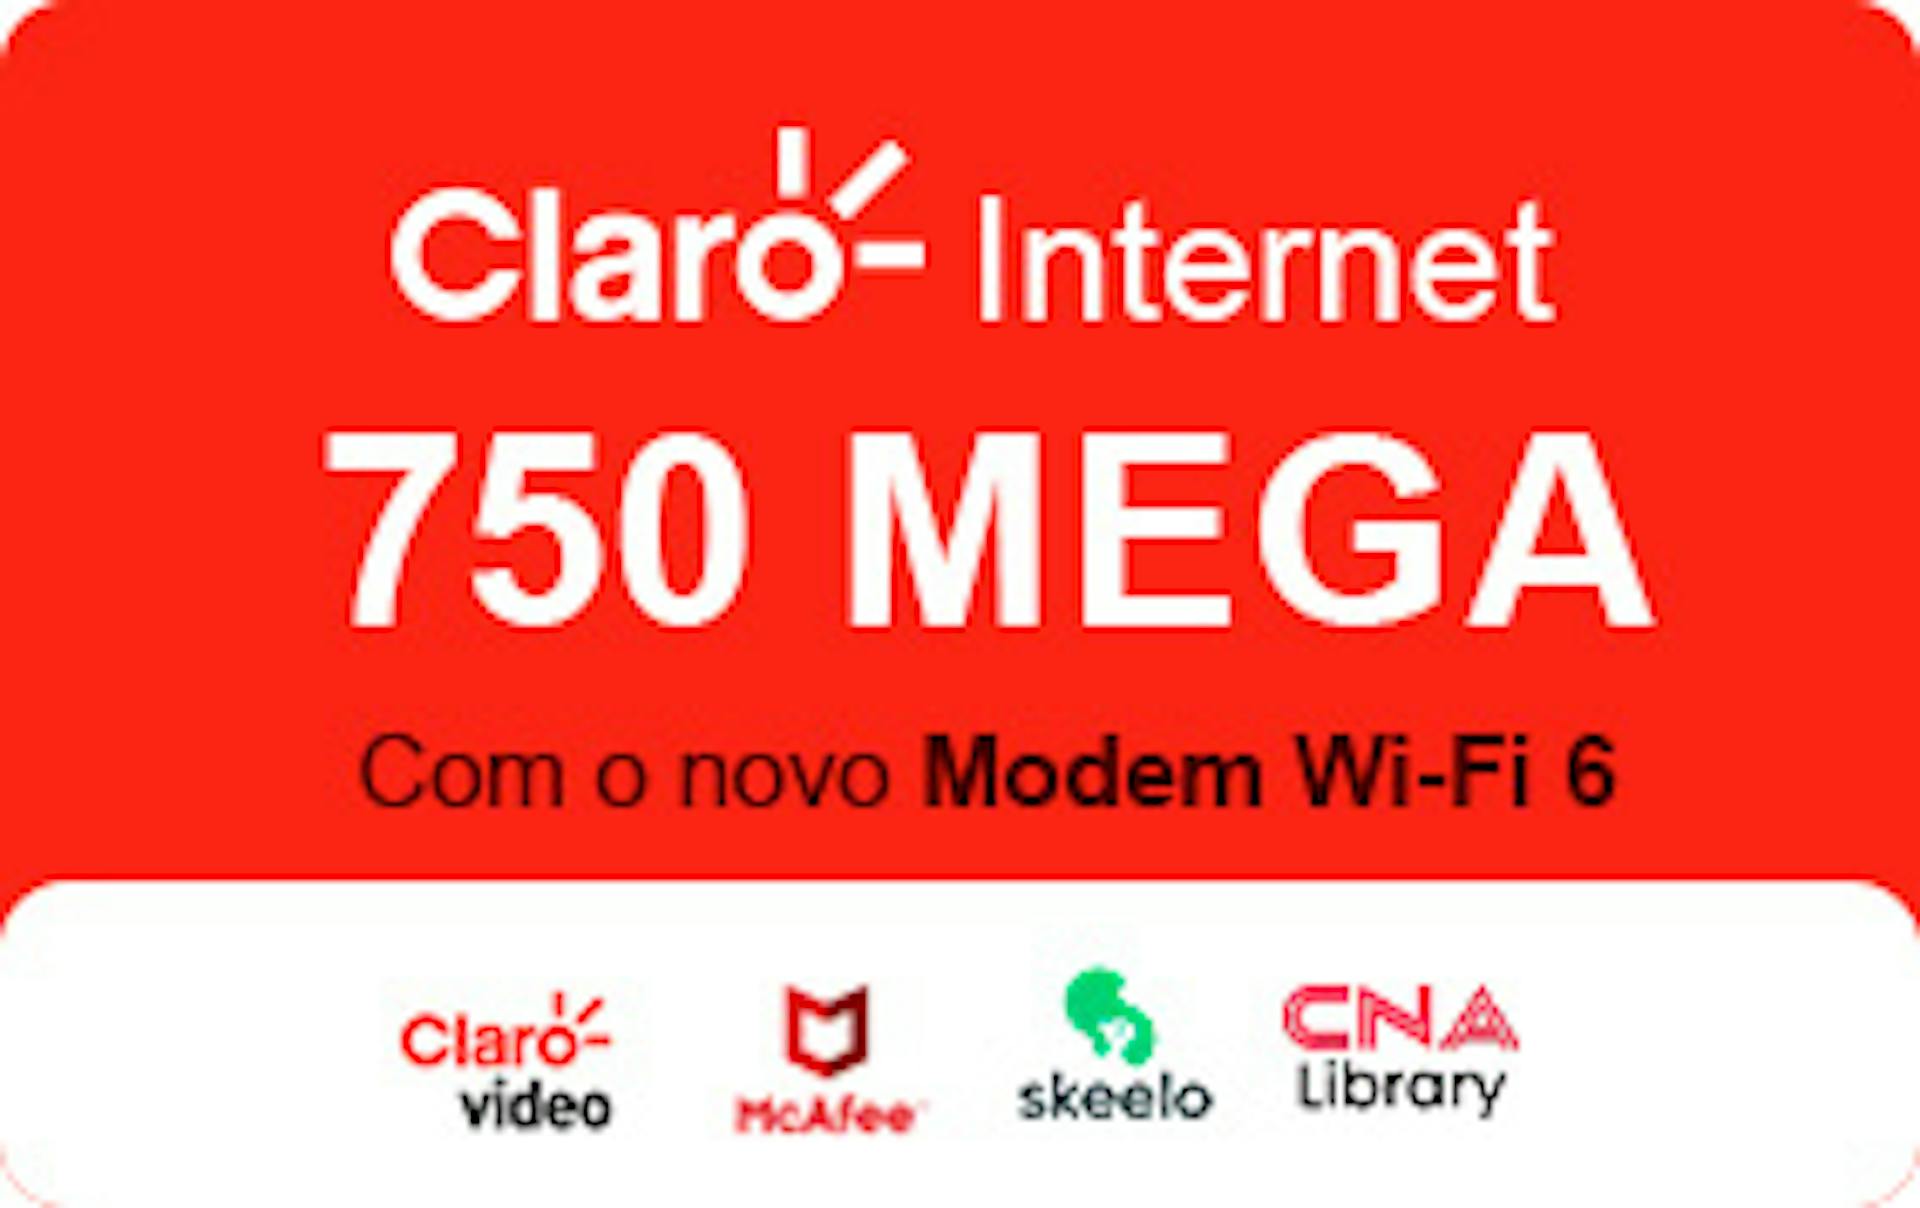 claro internet 750 mega